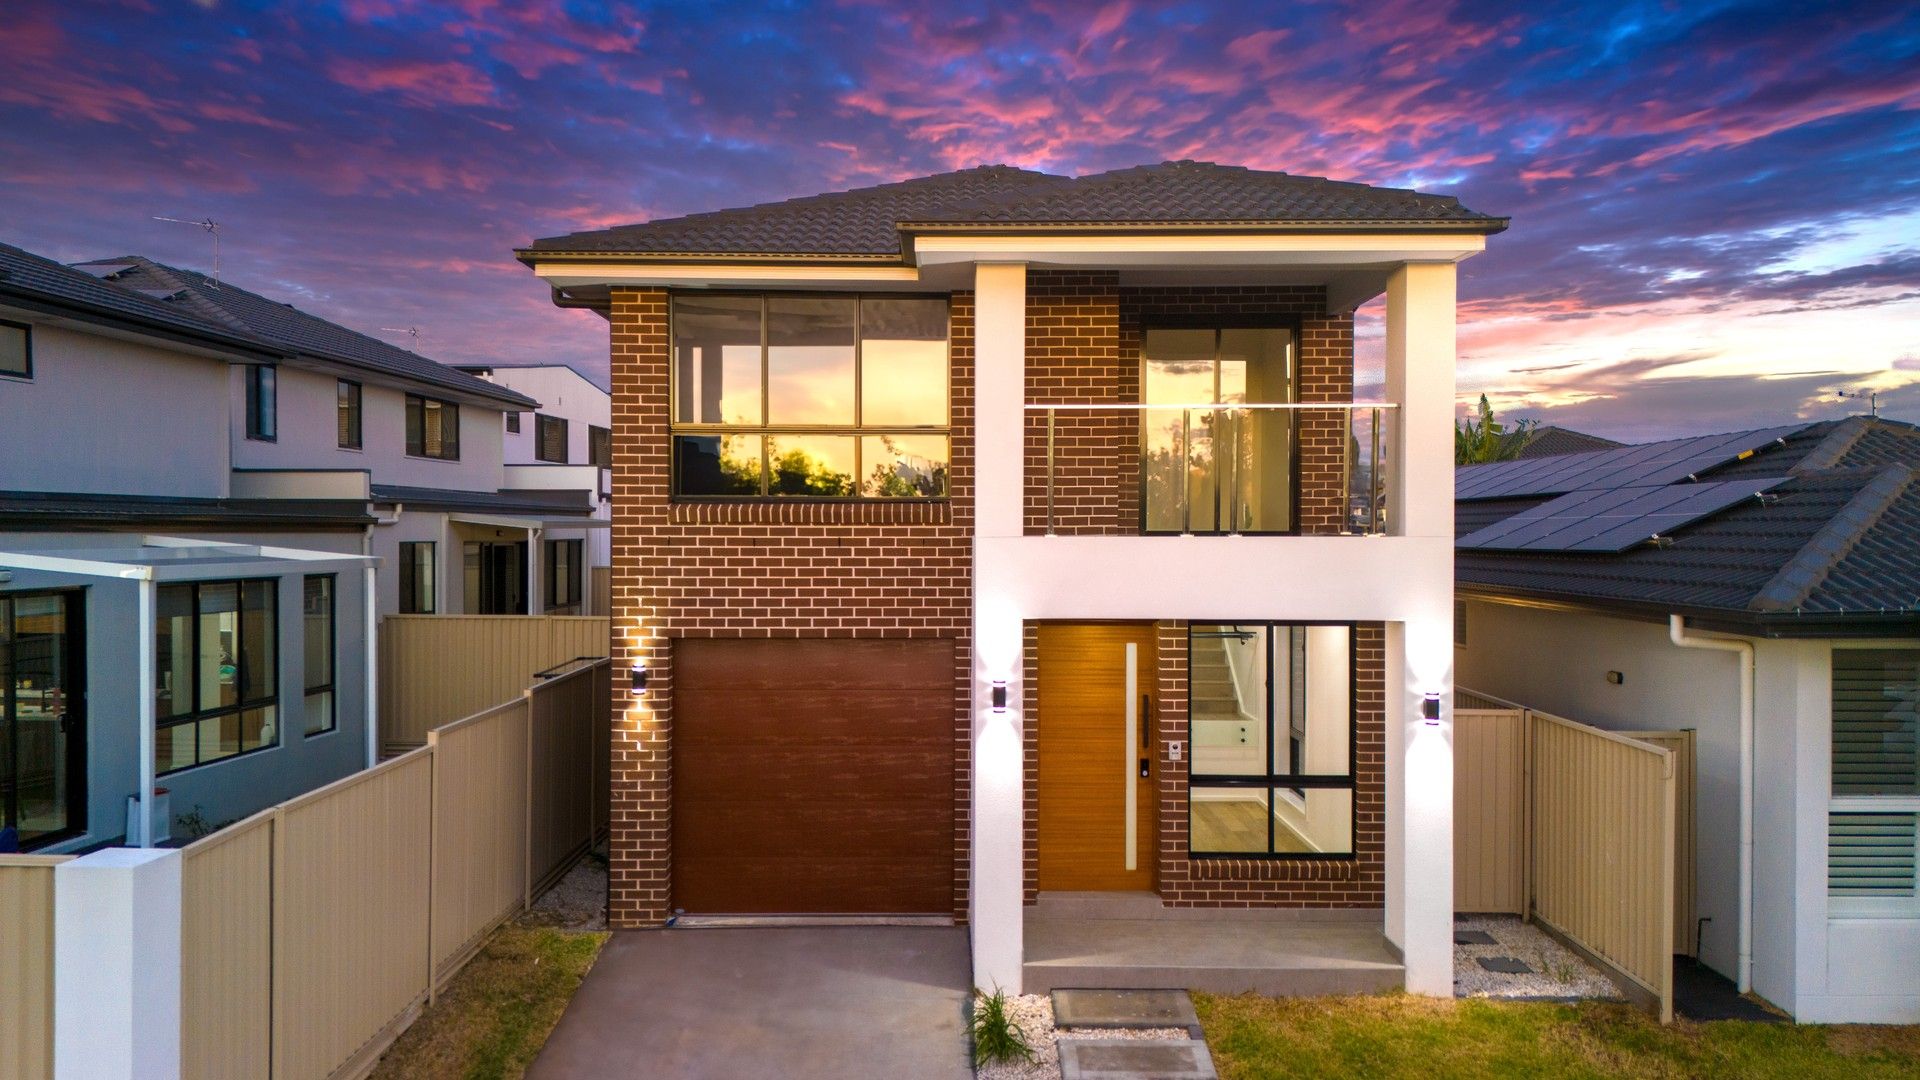 4 bedrooms New House & Land in 11 Cornus Crescent THE PONDS NSW, 2769